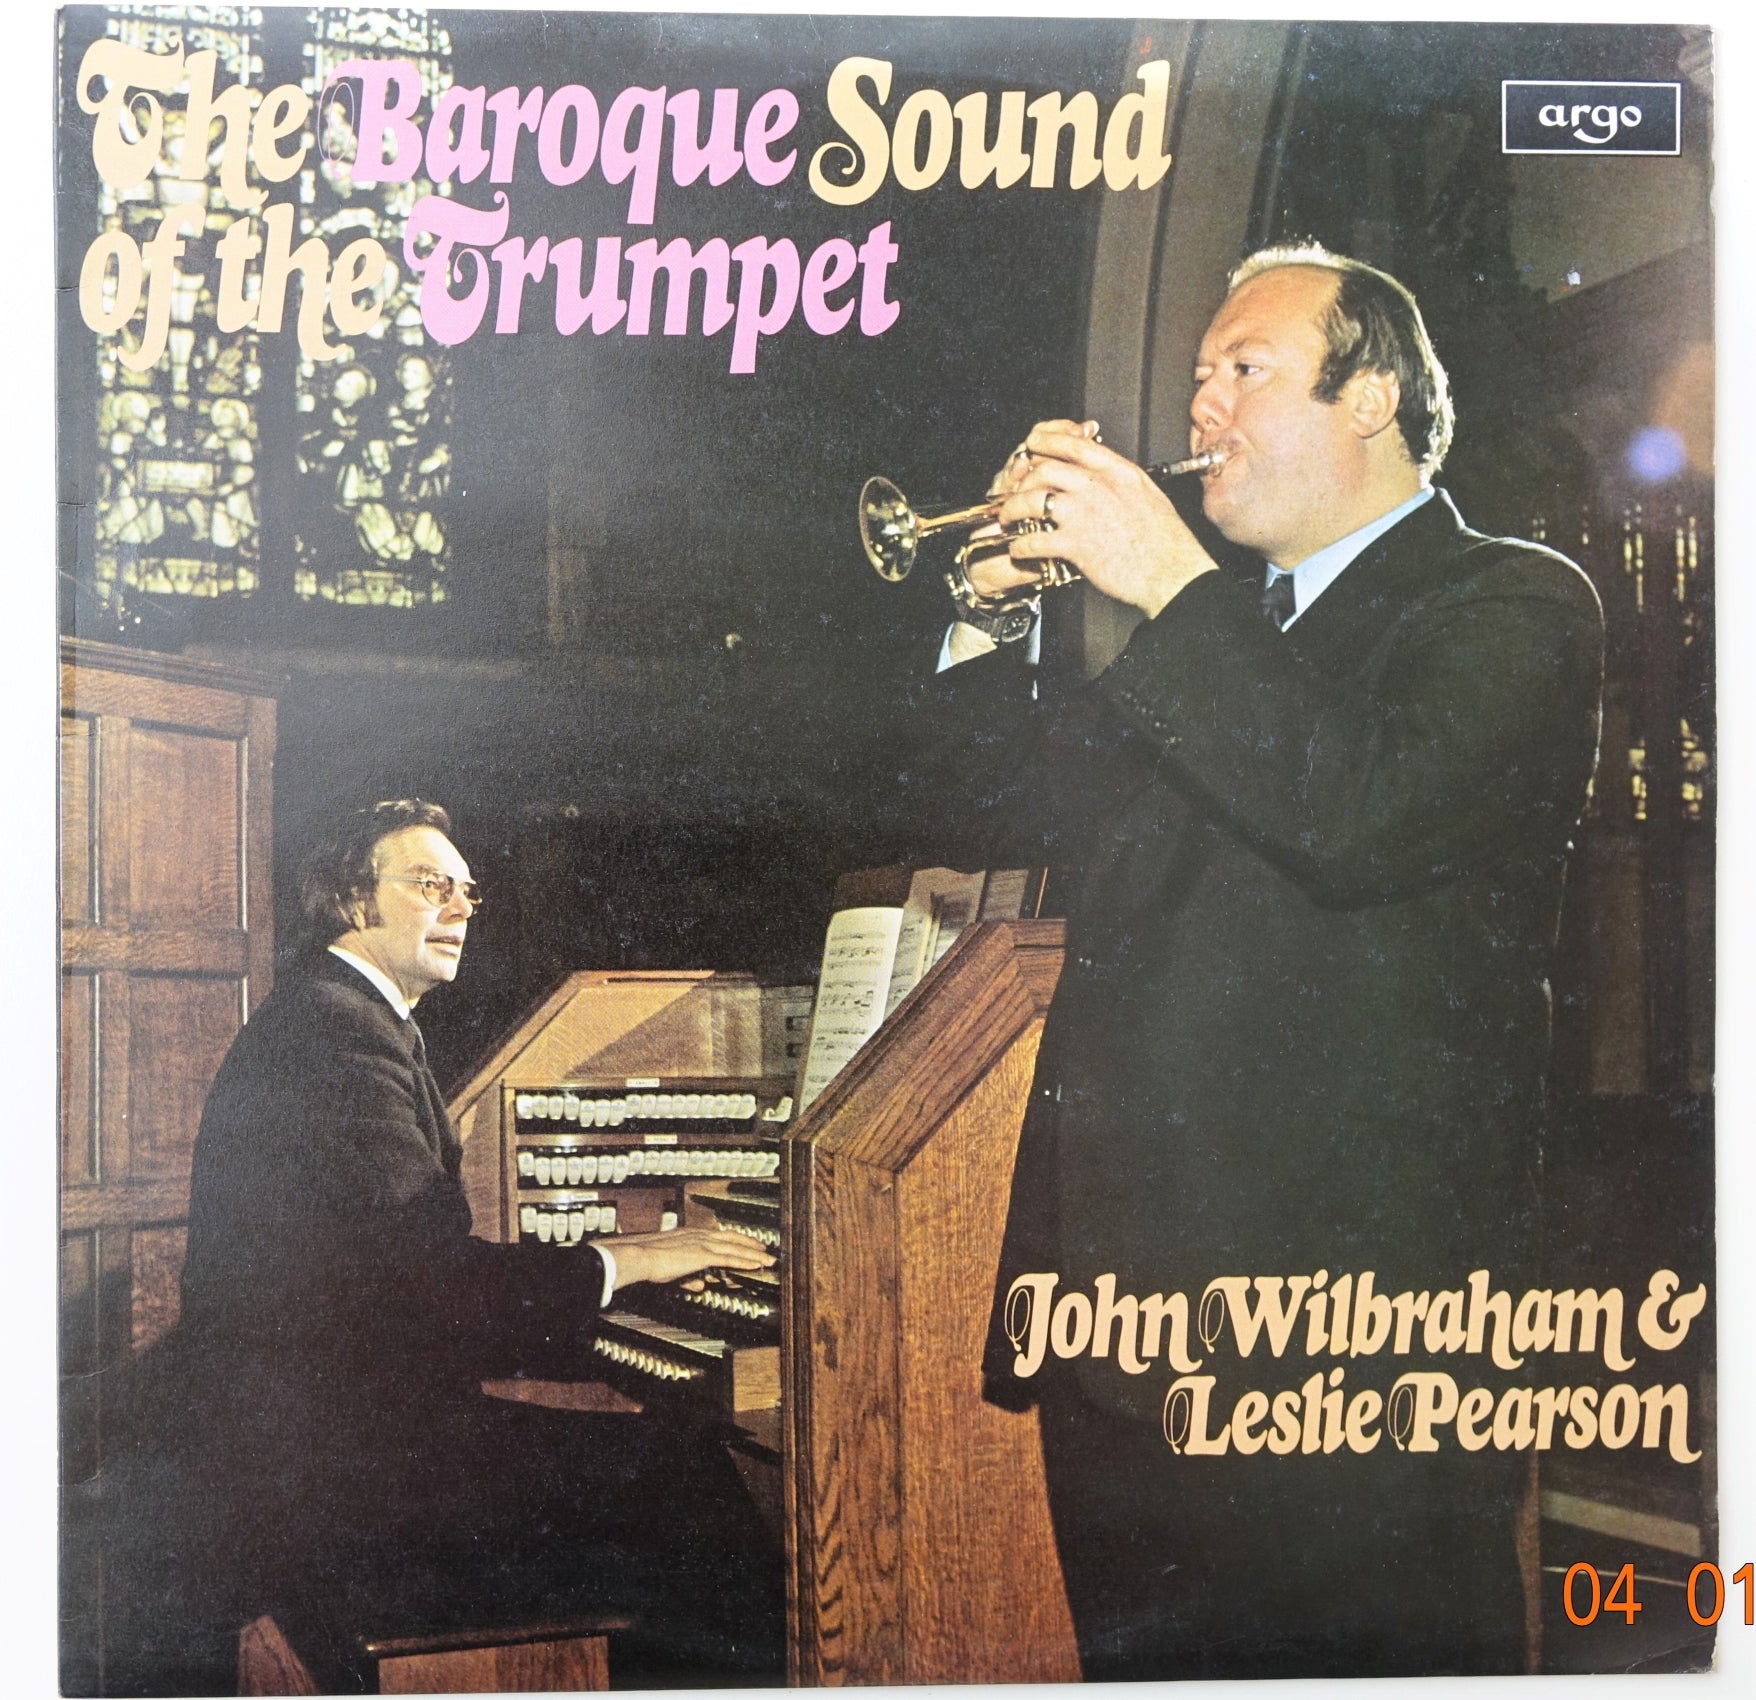 DEC002: John Wilbraham & Leslie Pearson - The Baroque Sound of the Trumpet